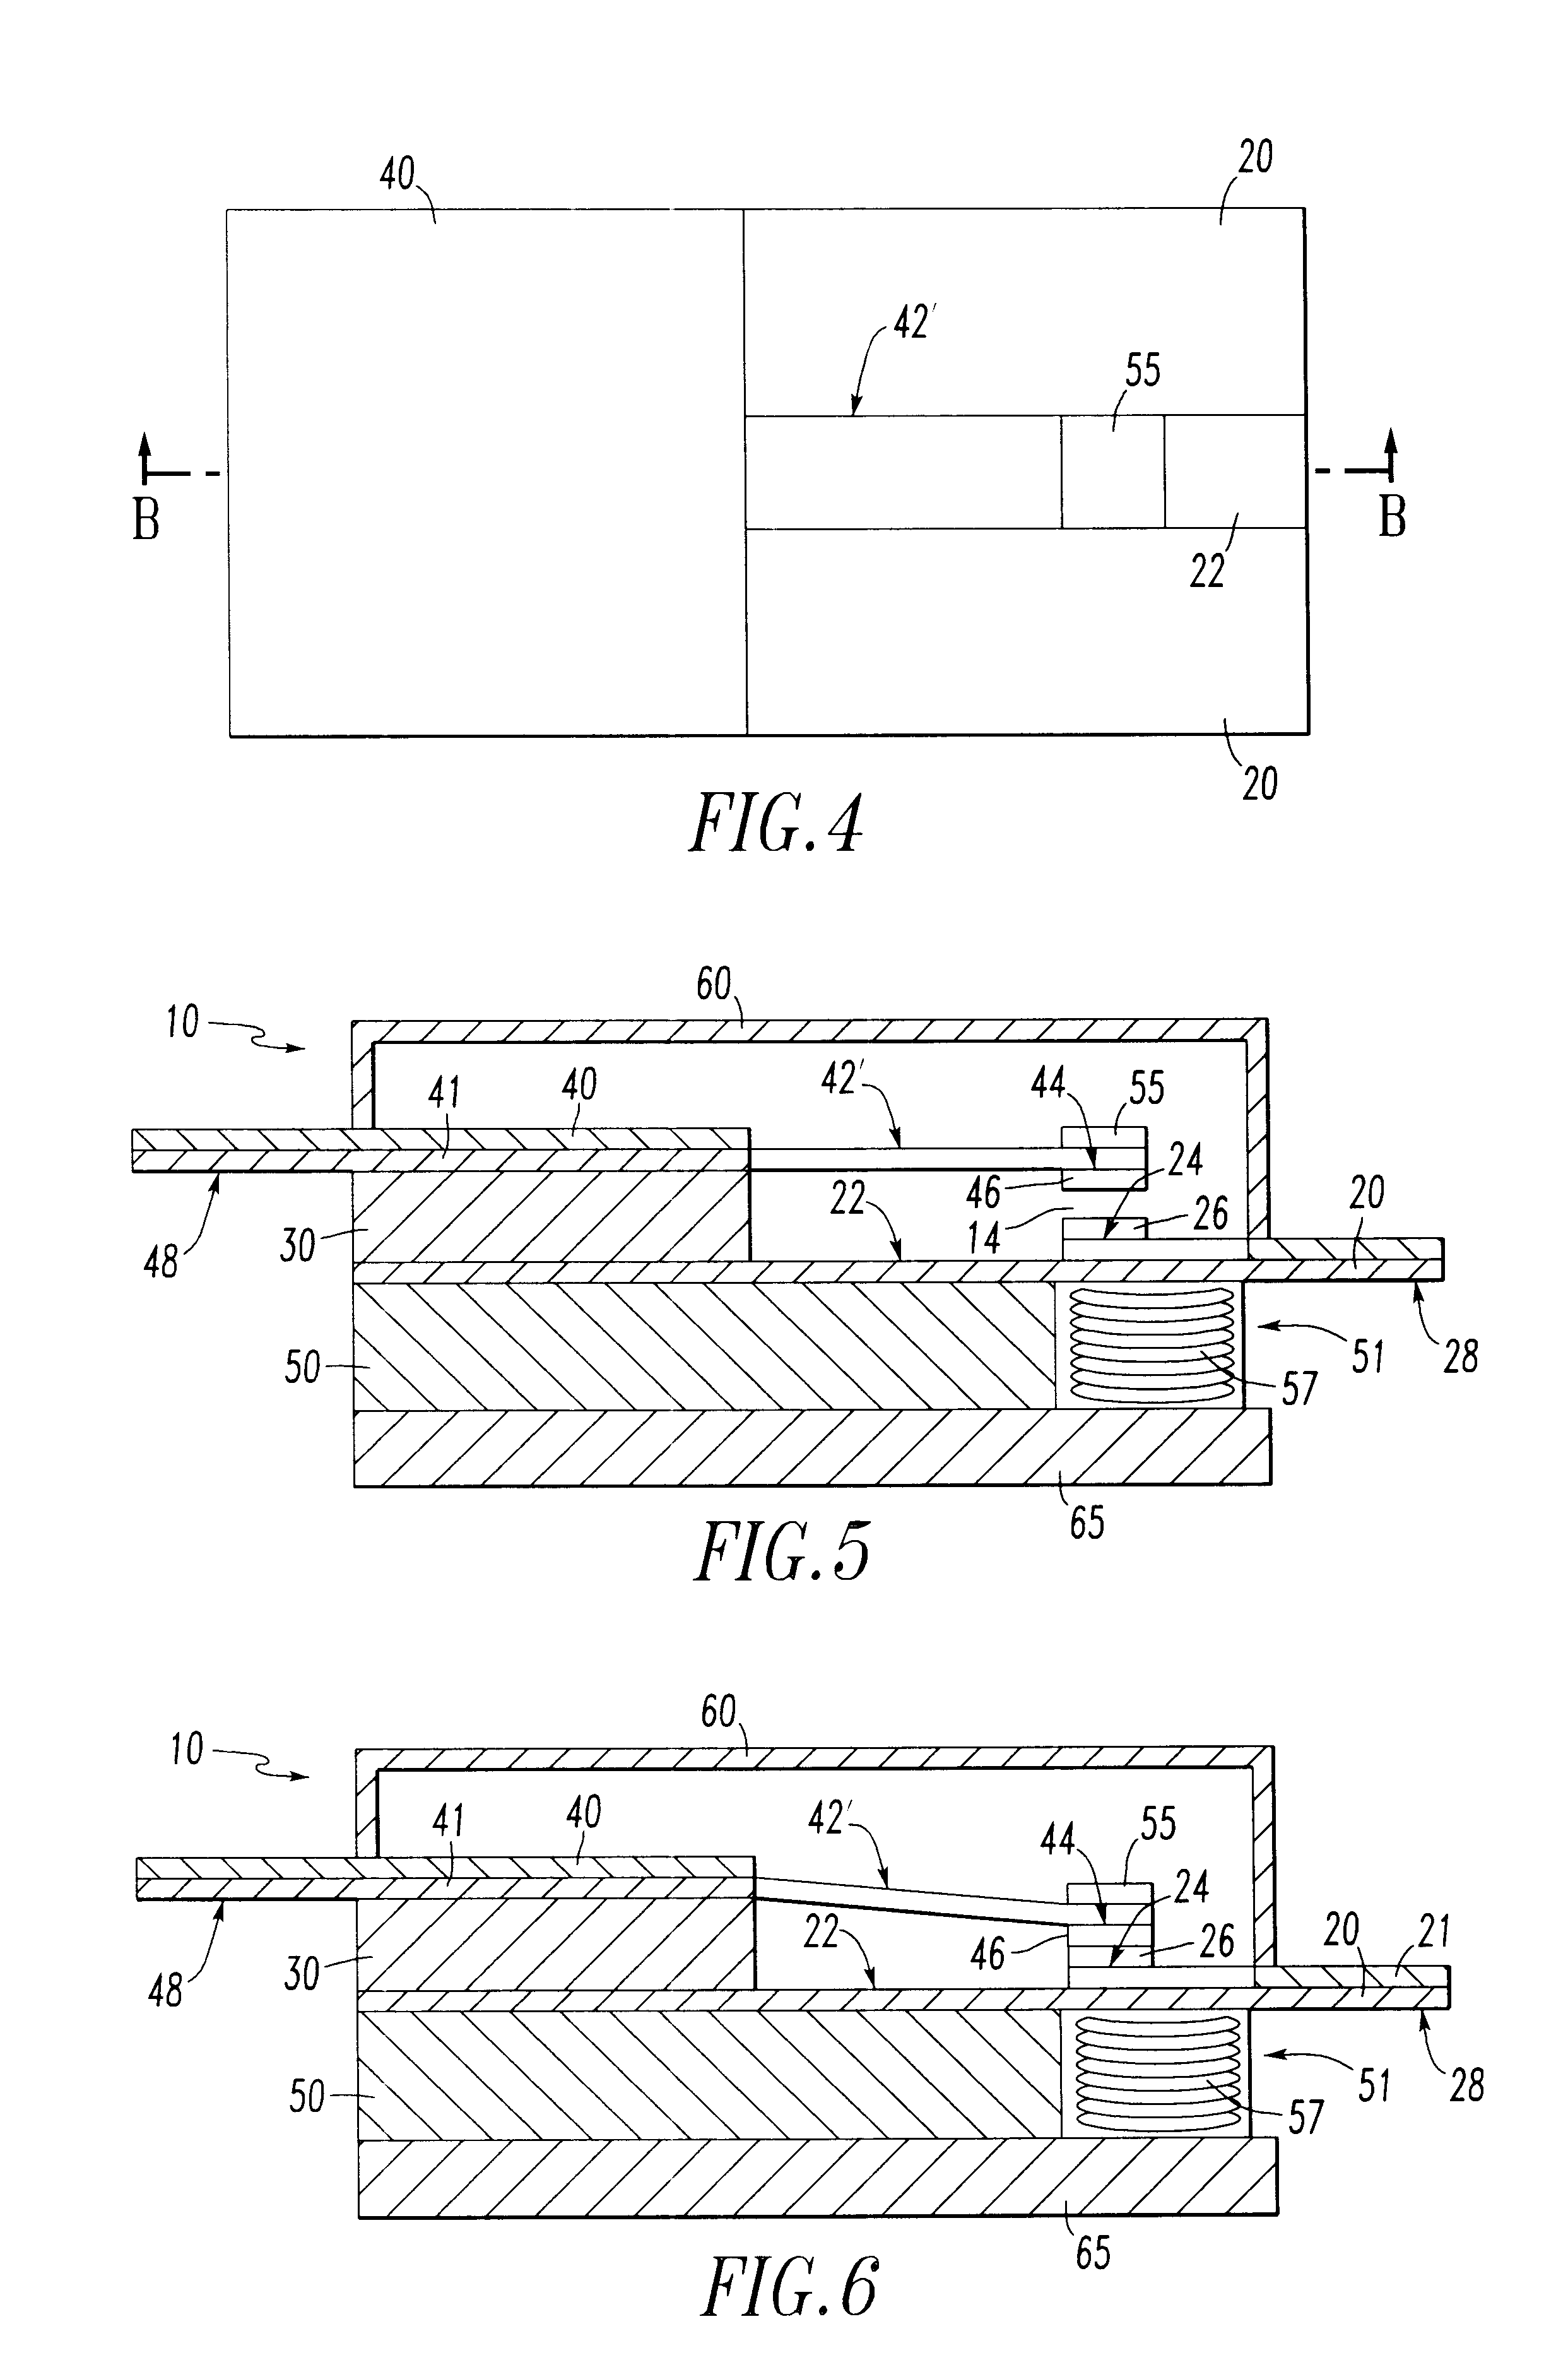 Laminate-based apparatus and method of fabrication